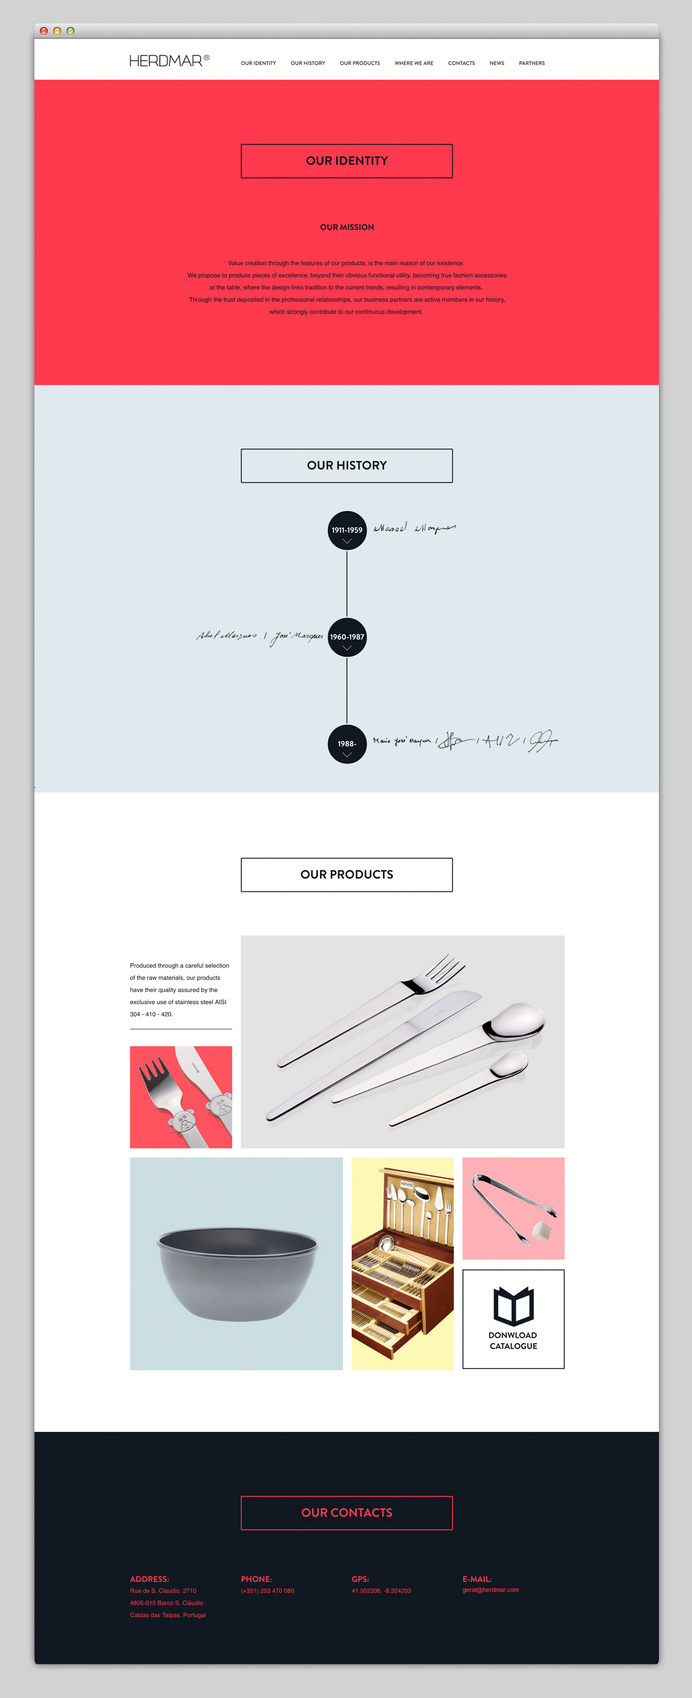 Websites We Love — Showcasing The Best in Web Design #cutlery #agency #designs #design #best #website #ui #minimal #webdesign #web #herdmar #typography